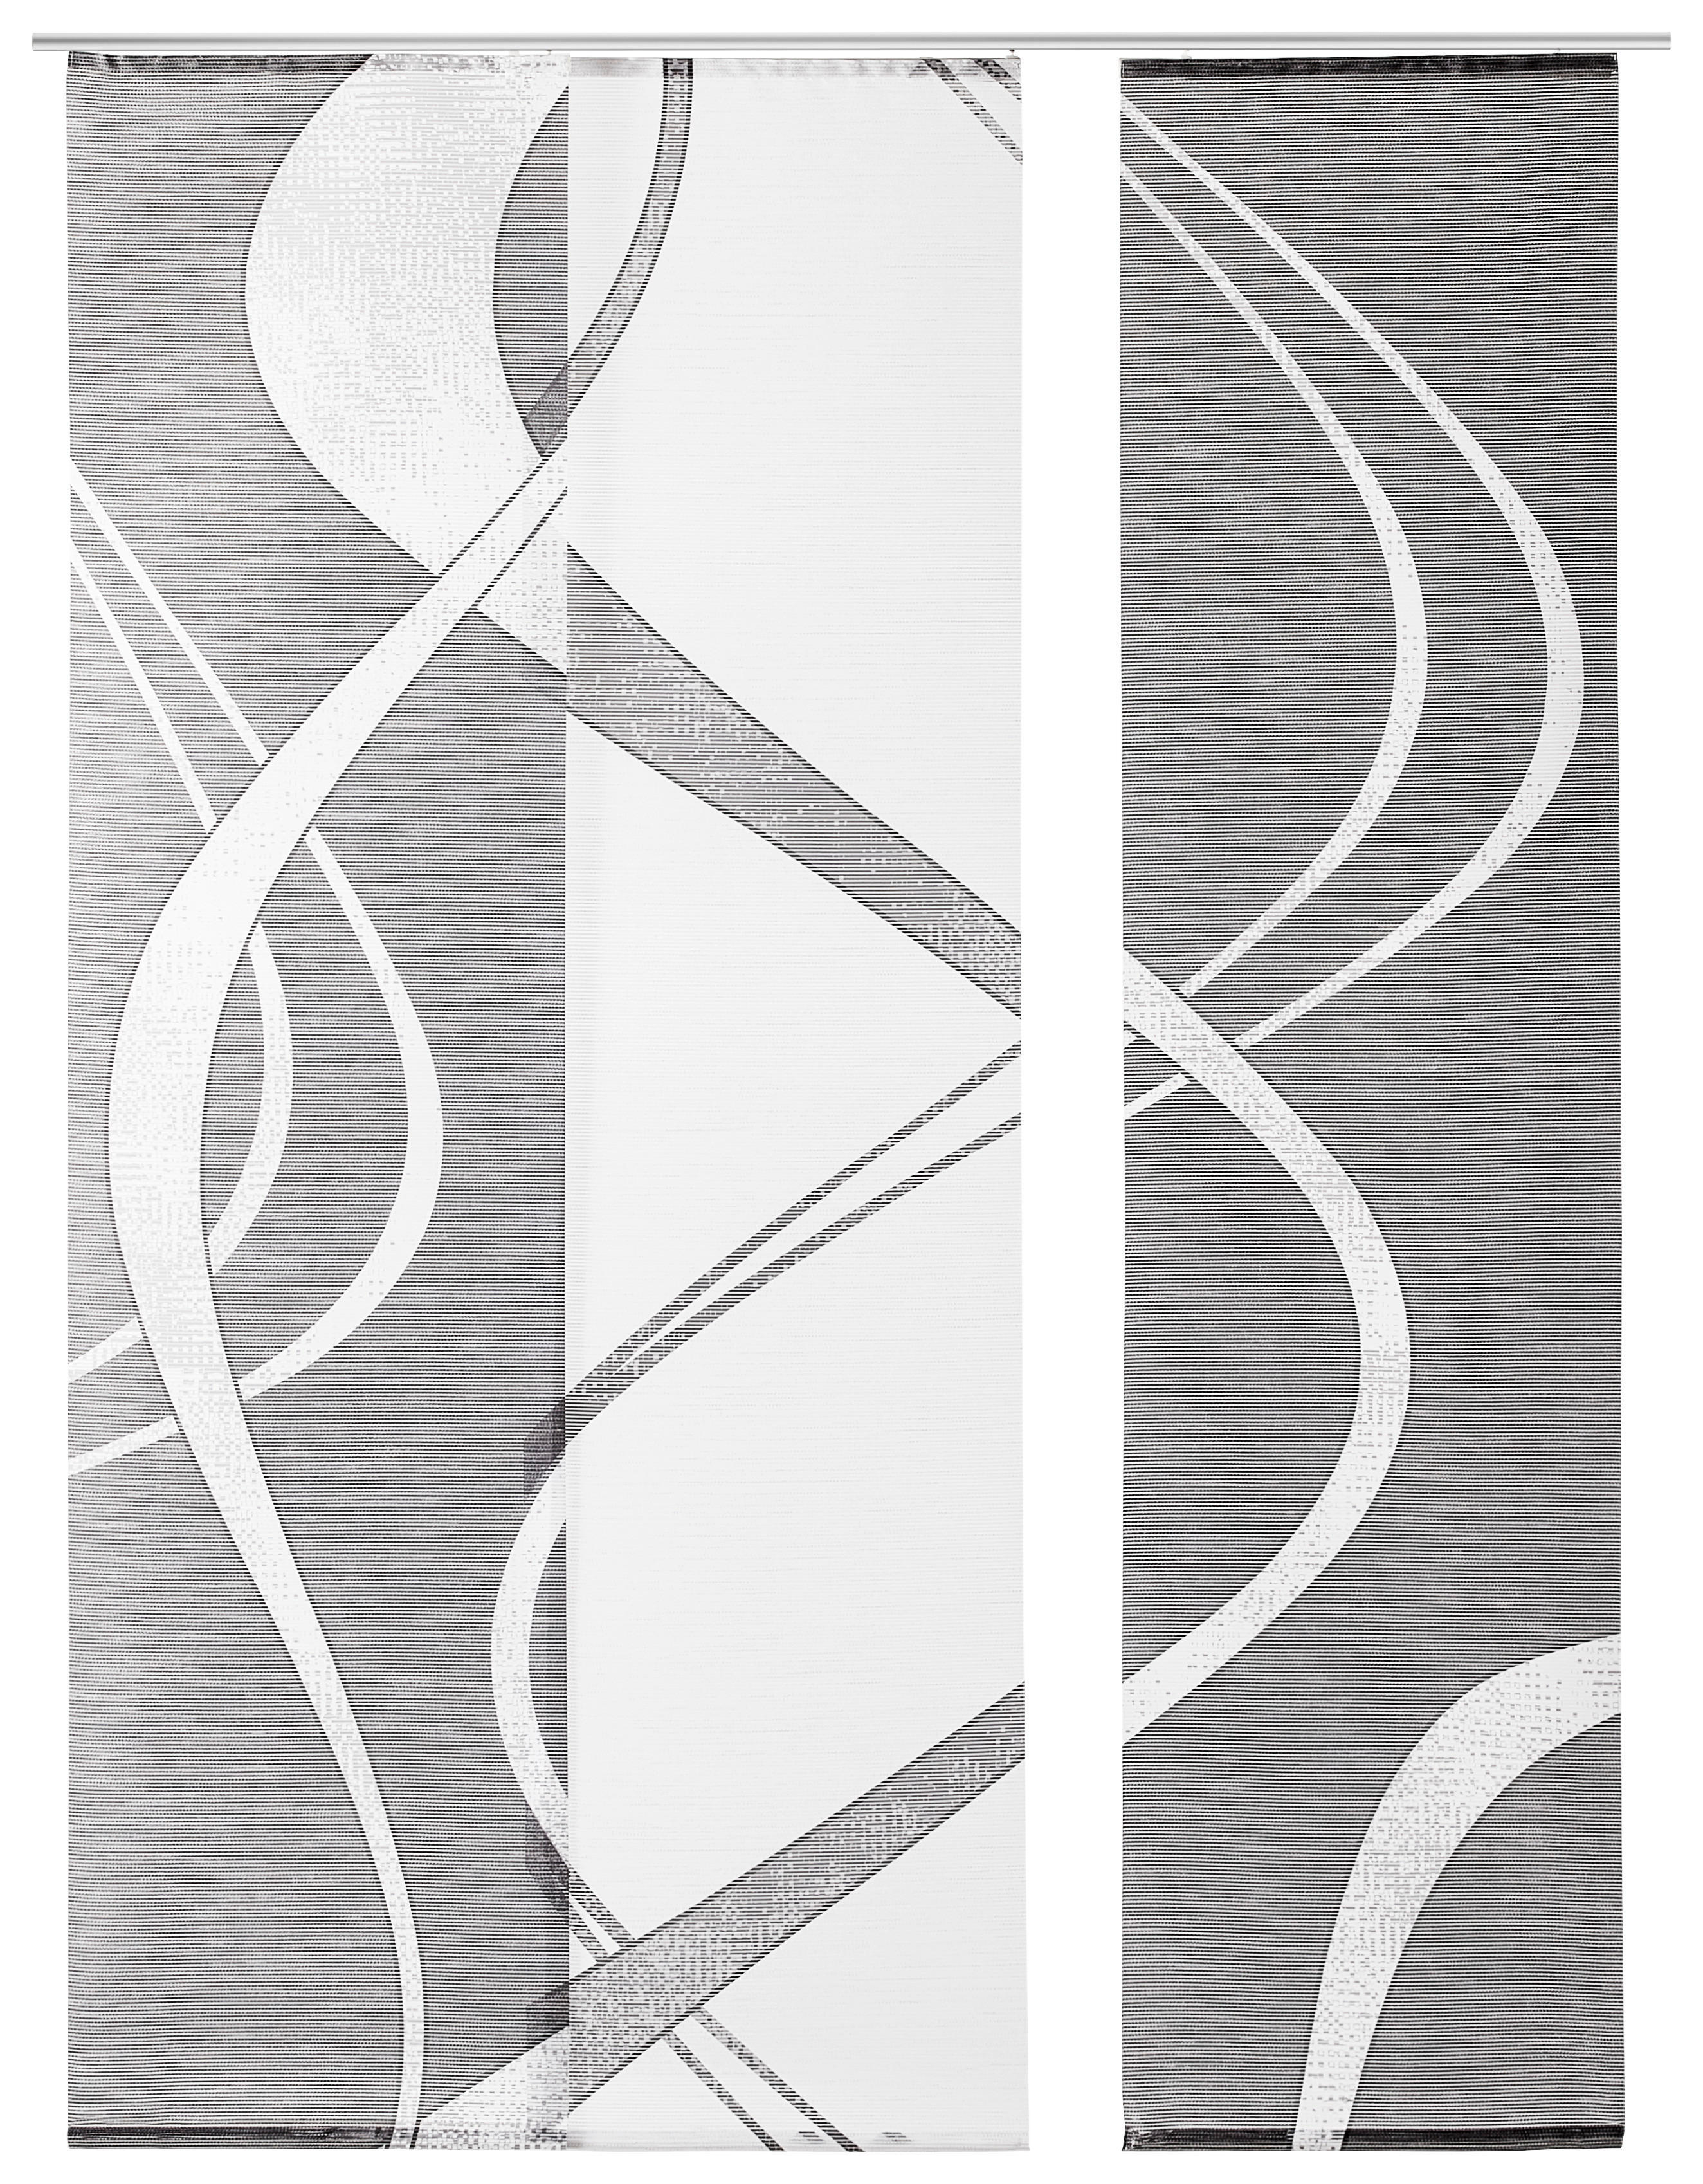 FLÄCHENVORHANG 3ER SET  3 Stück  halbtransparent   60/245 cm  - Weiß/Grau, Design, Textil (60/245cm) - Novel